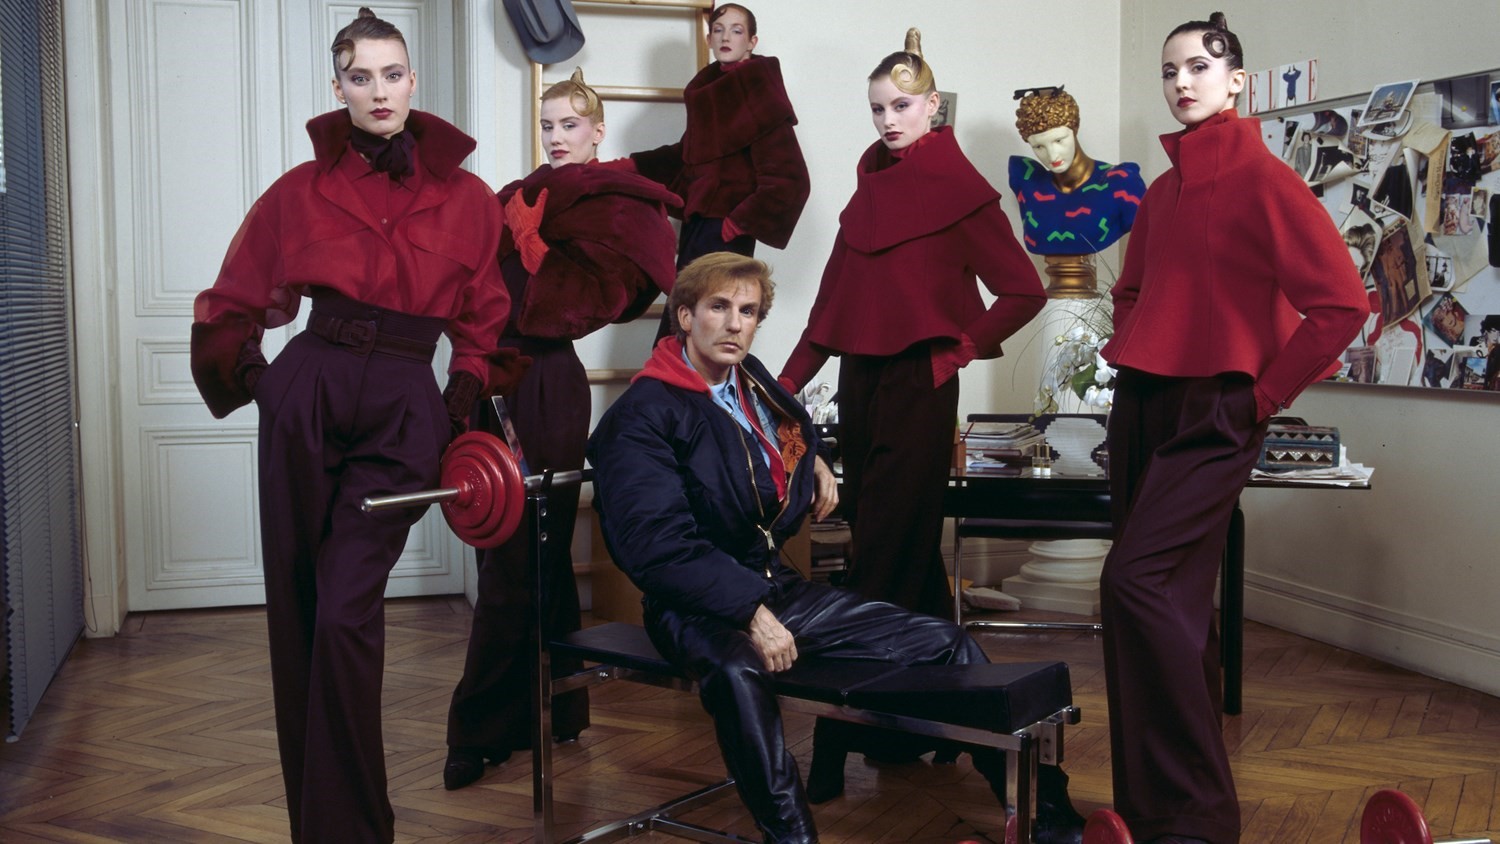 Claude Montana fashion designer 1980s